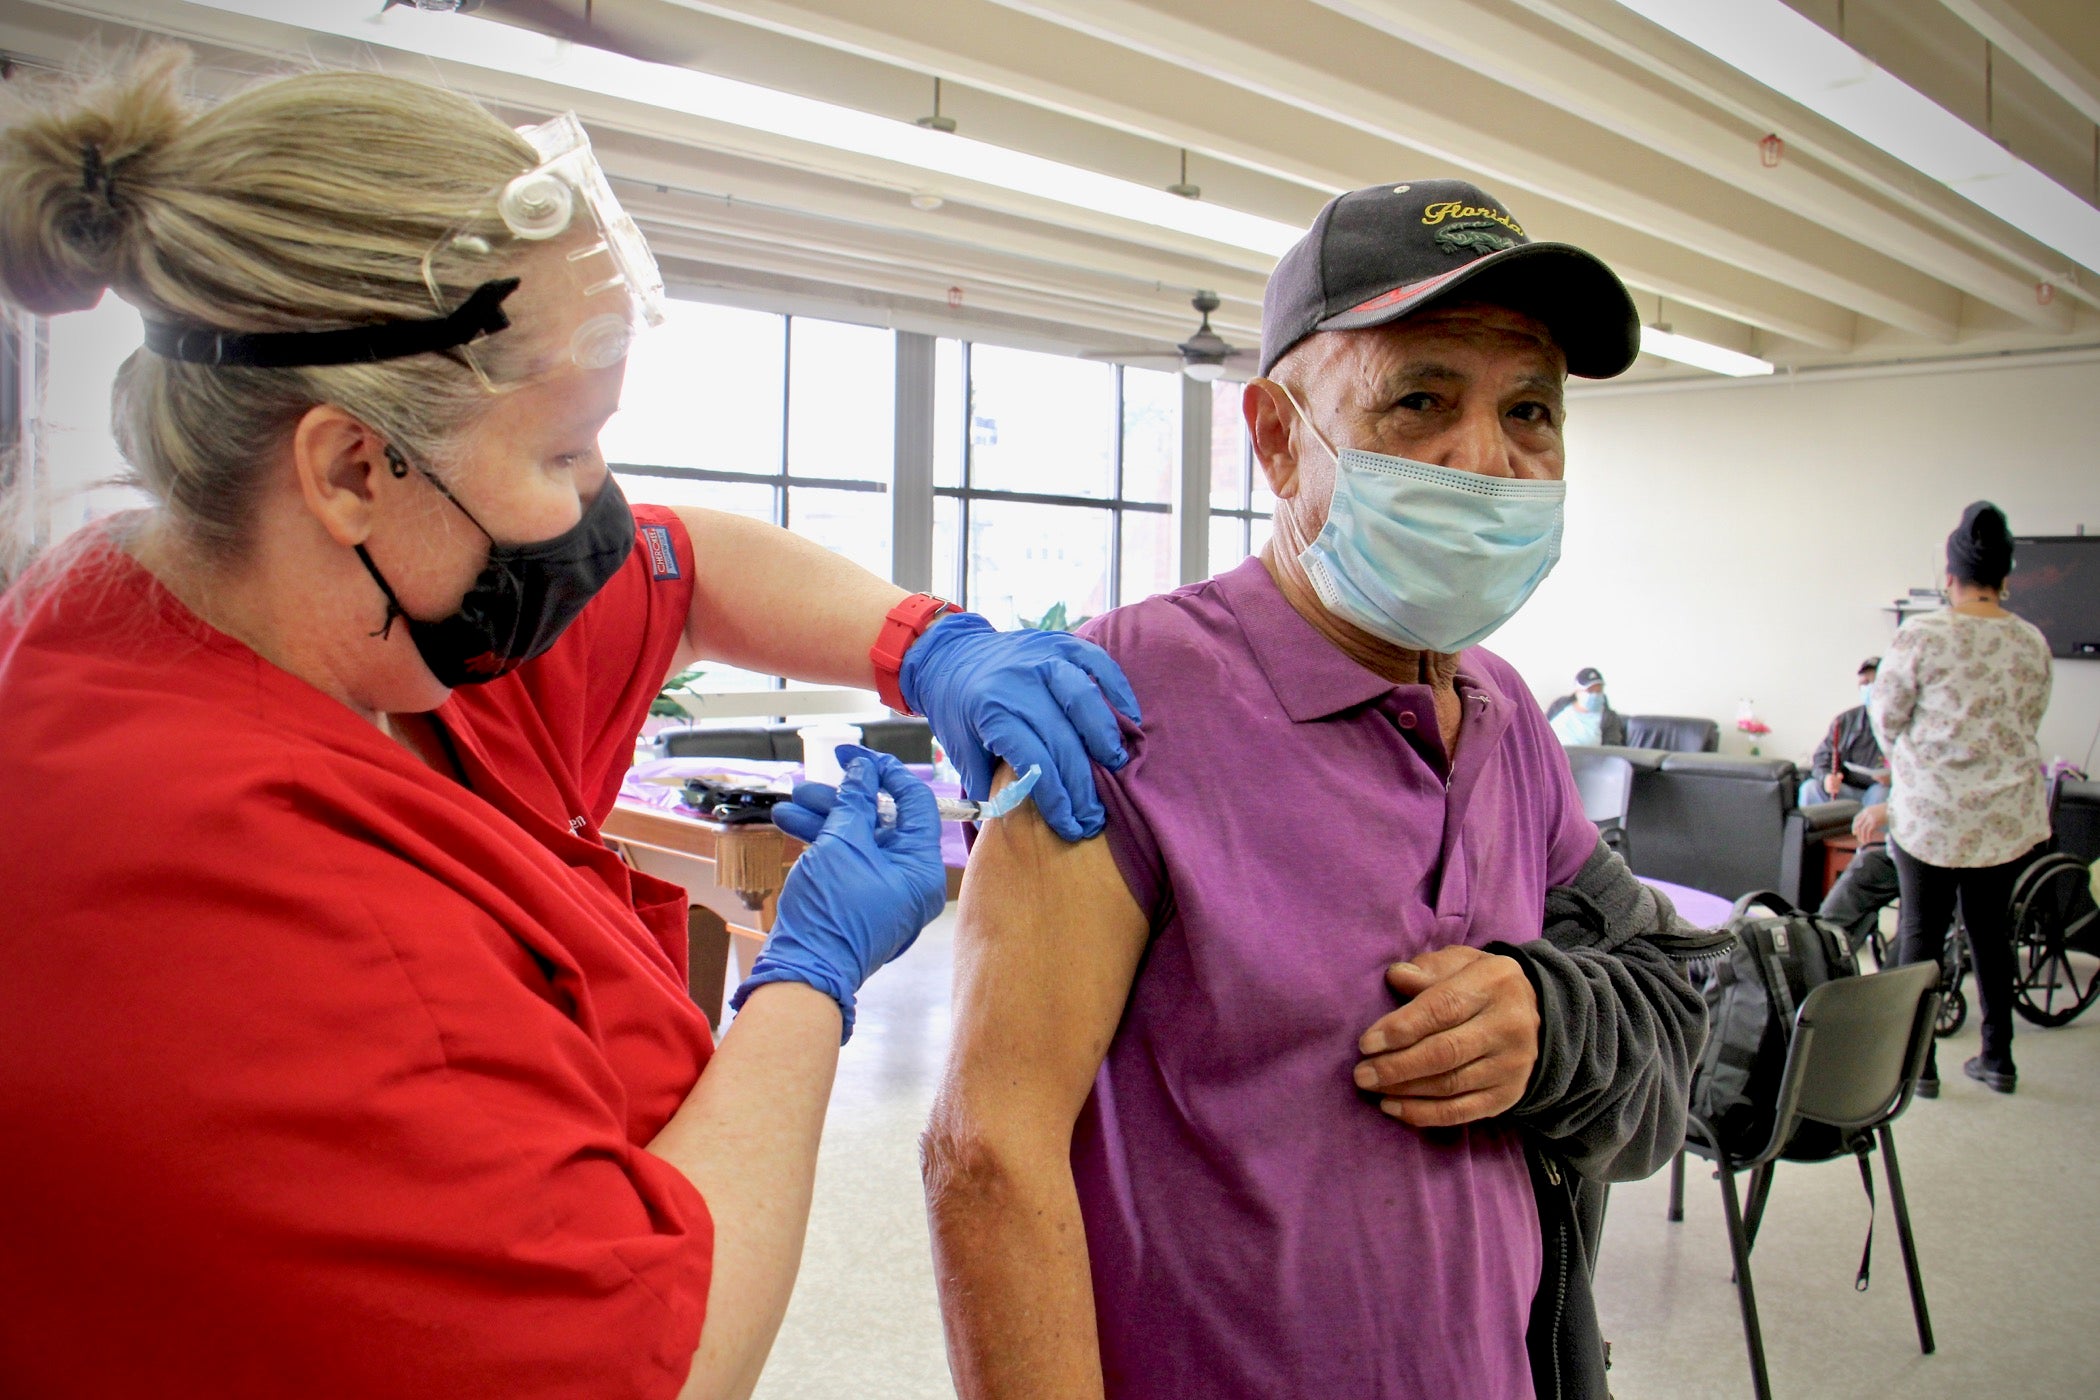 Eduardo Delgado, 79, gets his COVID-19 vaccination from Gail Bagnato